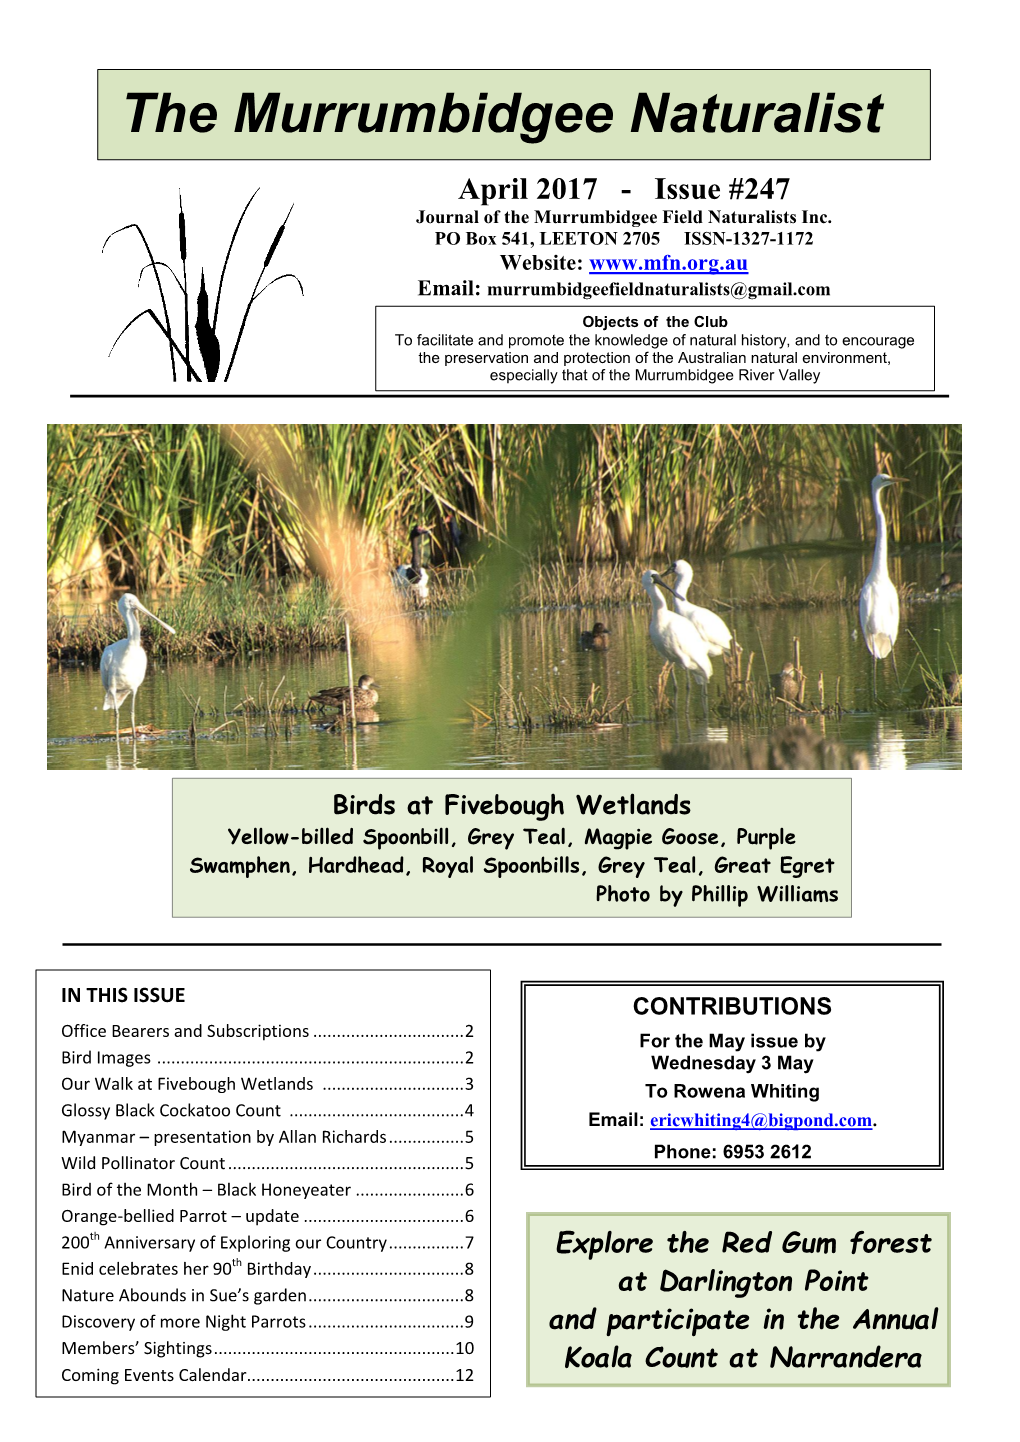 Issue #247 Journal of the Murrumbidgee Field Naturalists Inc